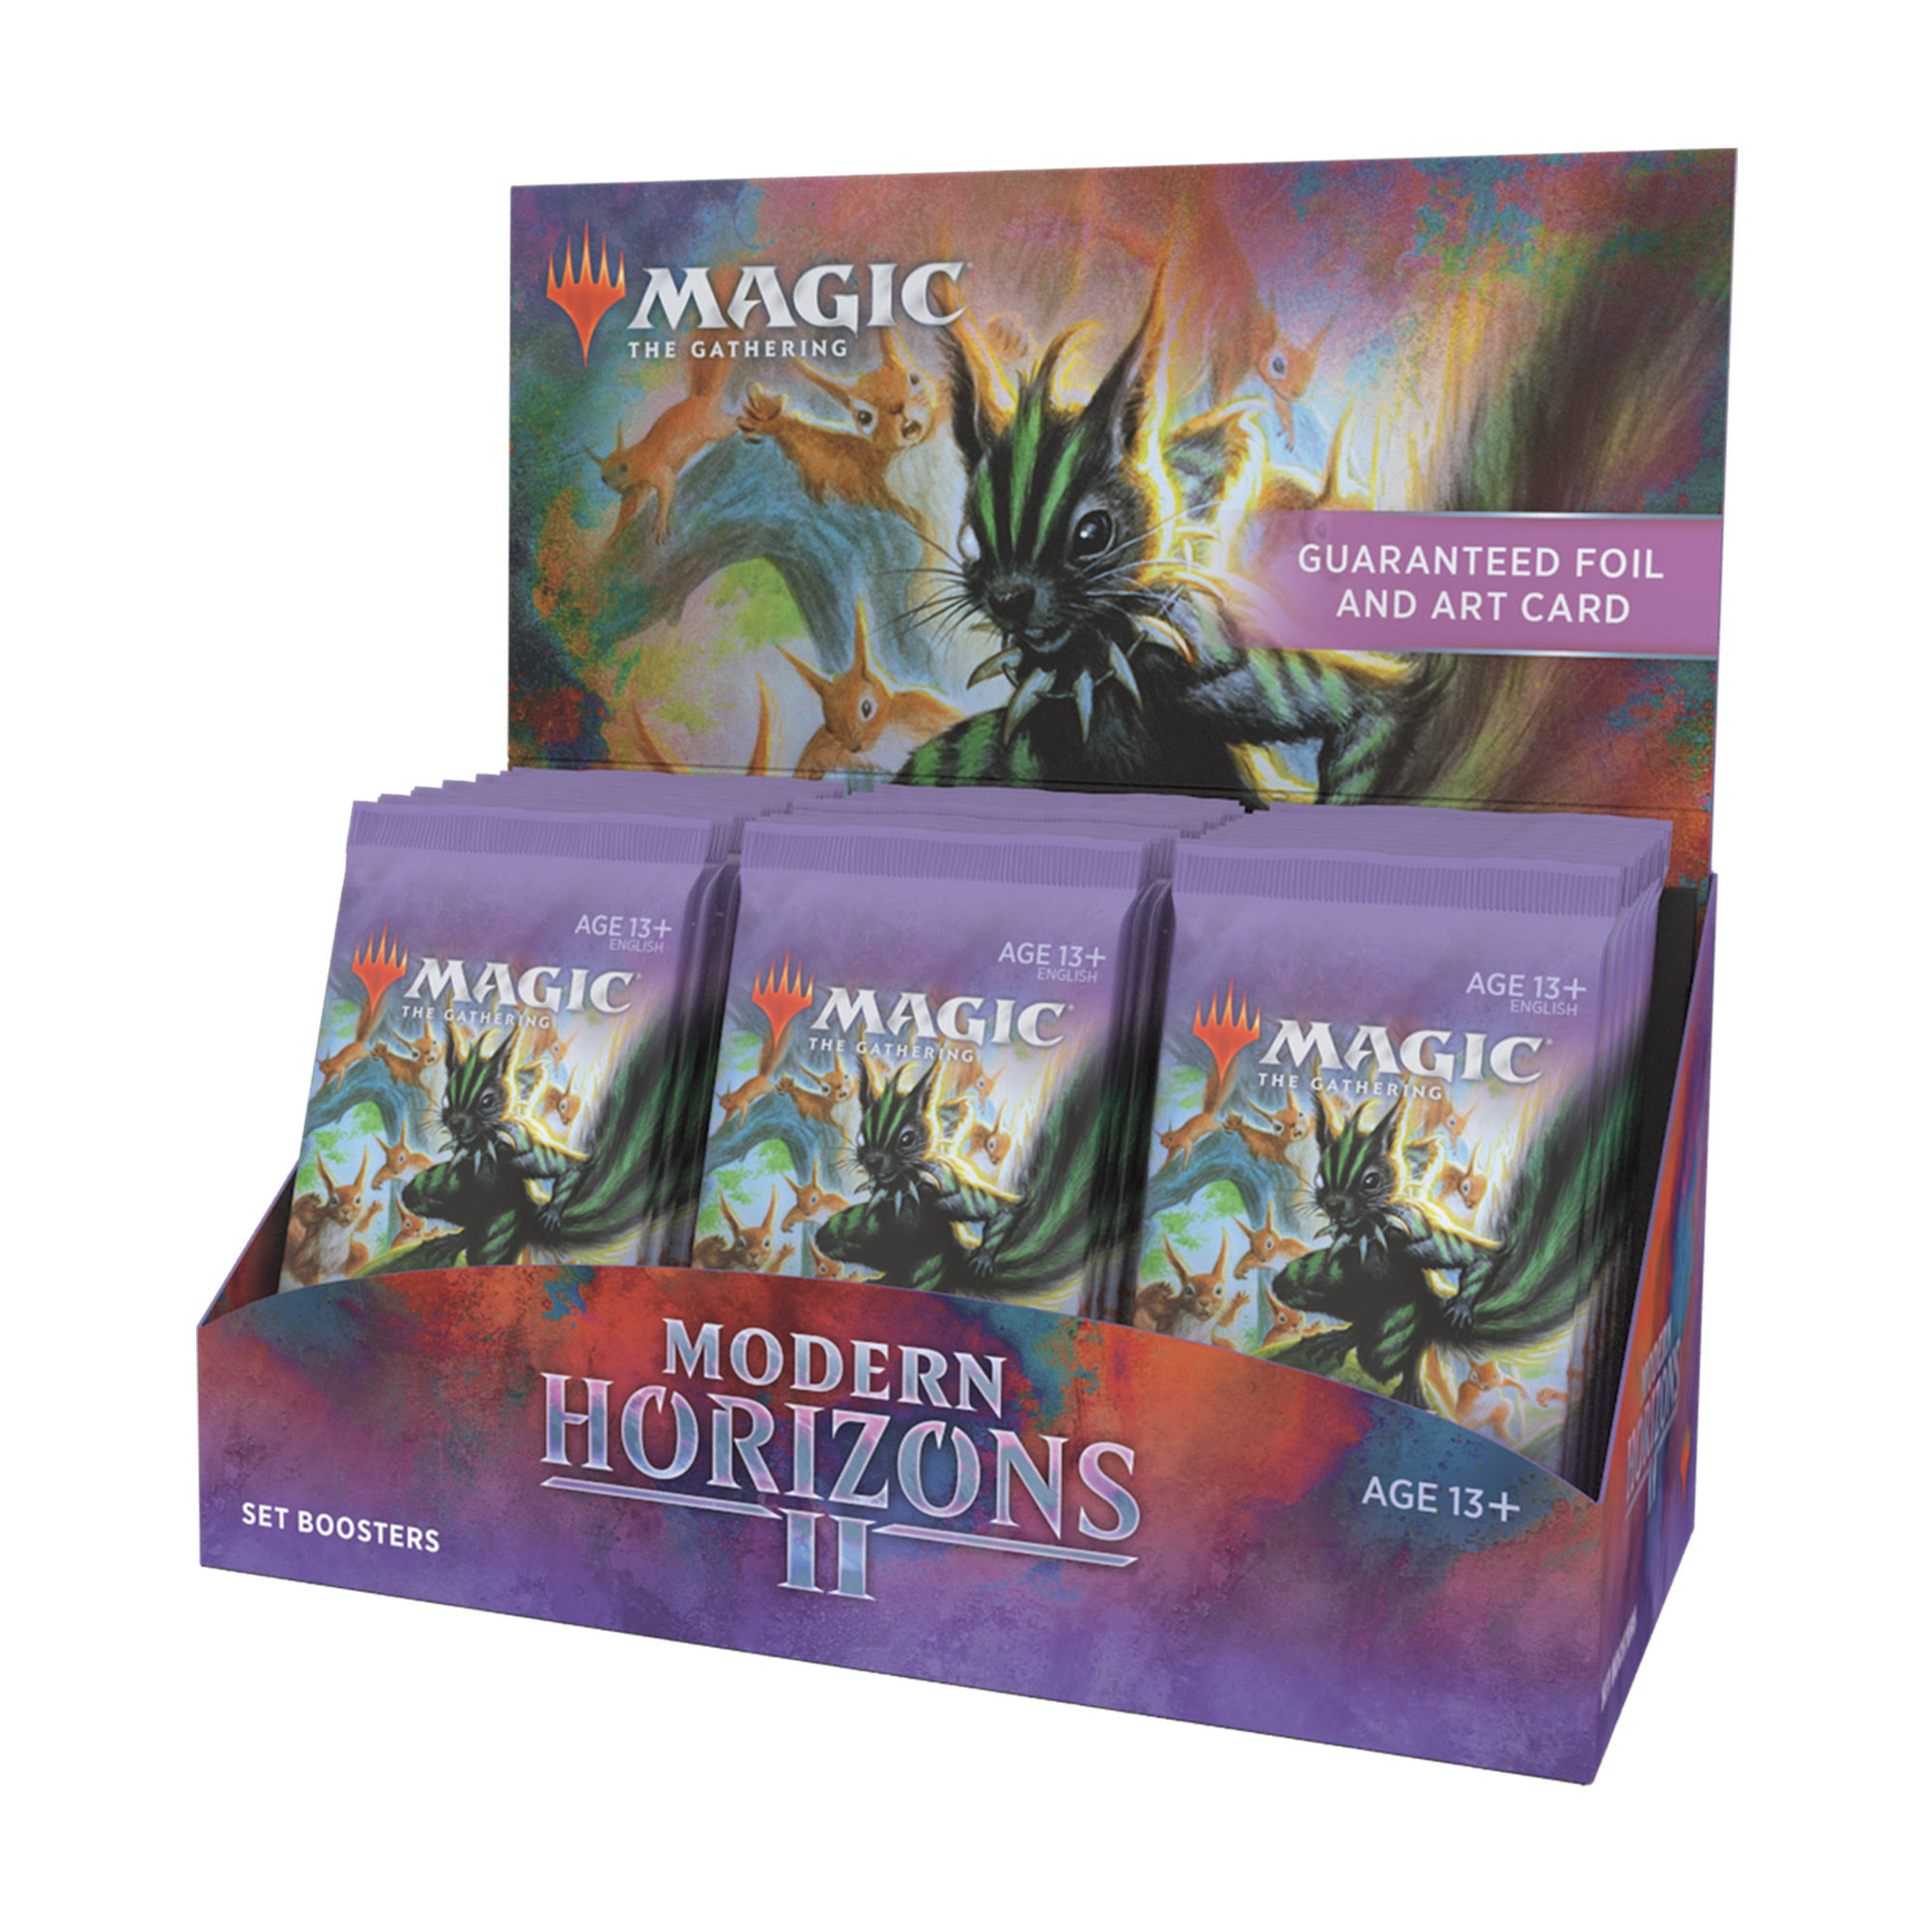 Magic The Gathering - Modern Horizons 2 - Set Booster Box